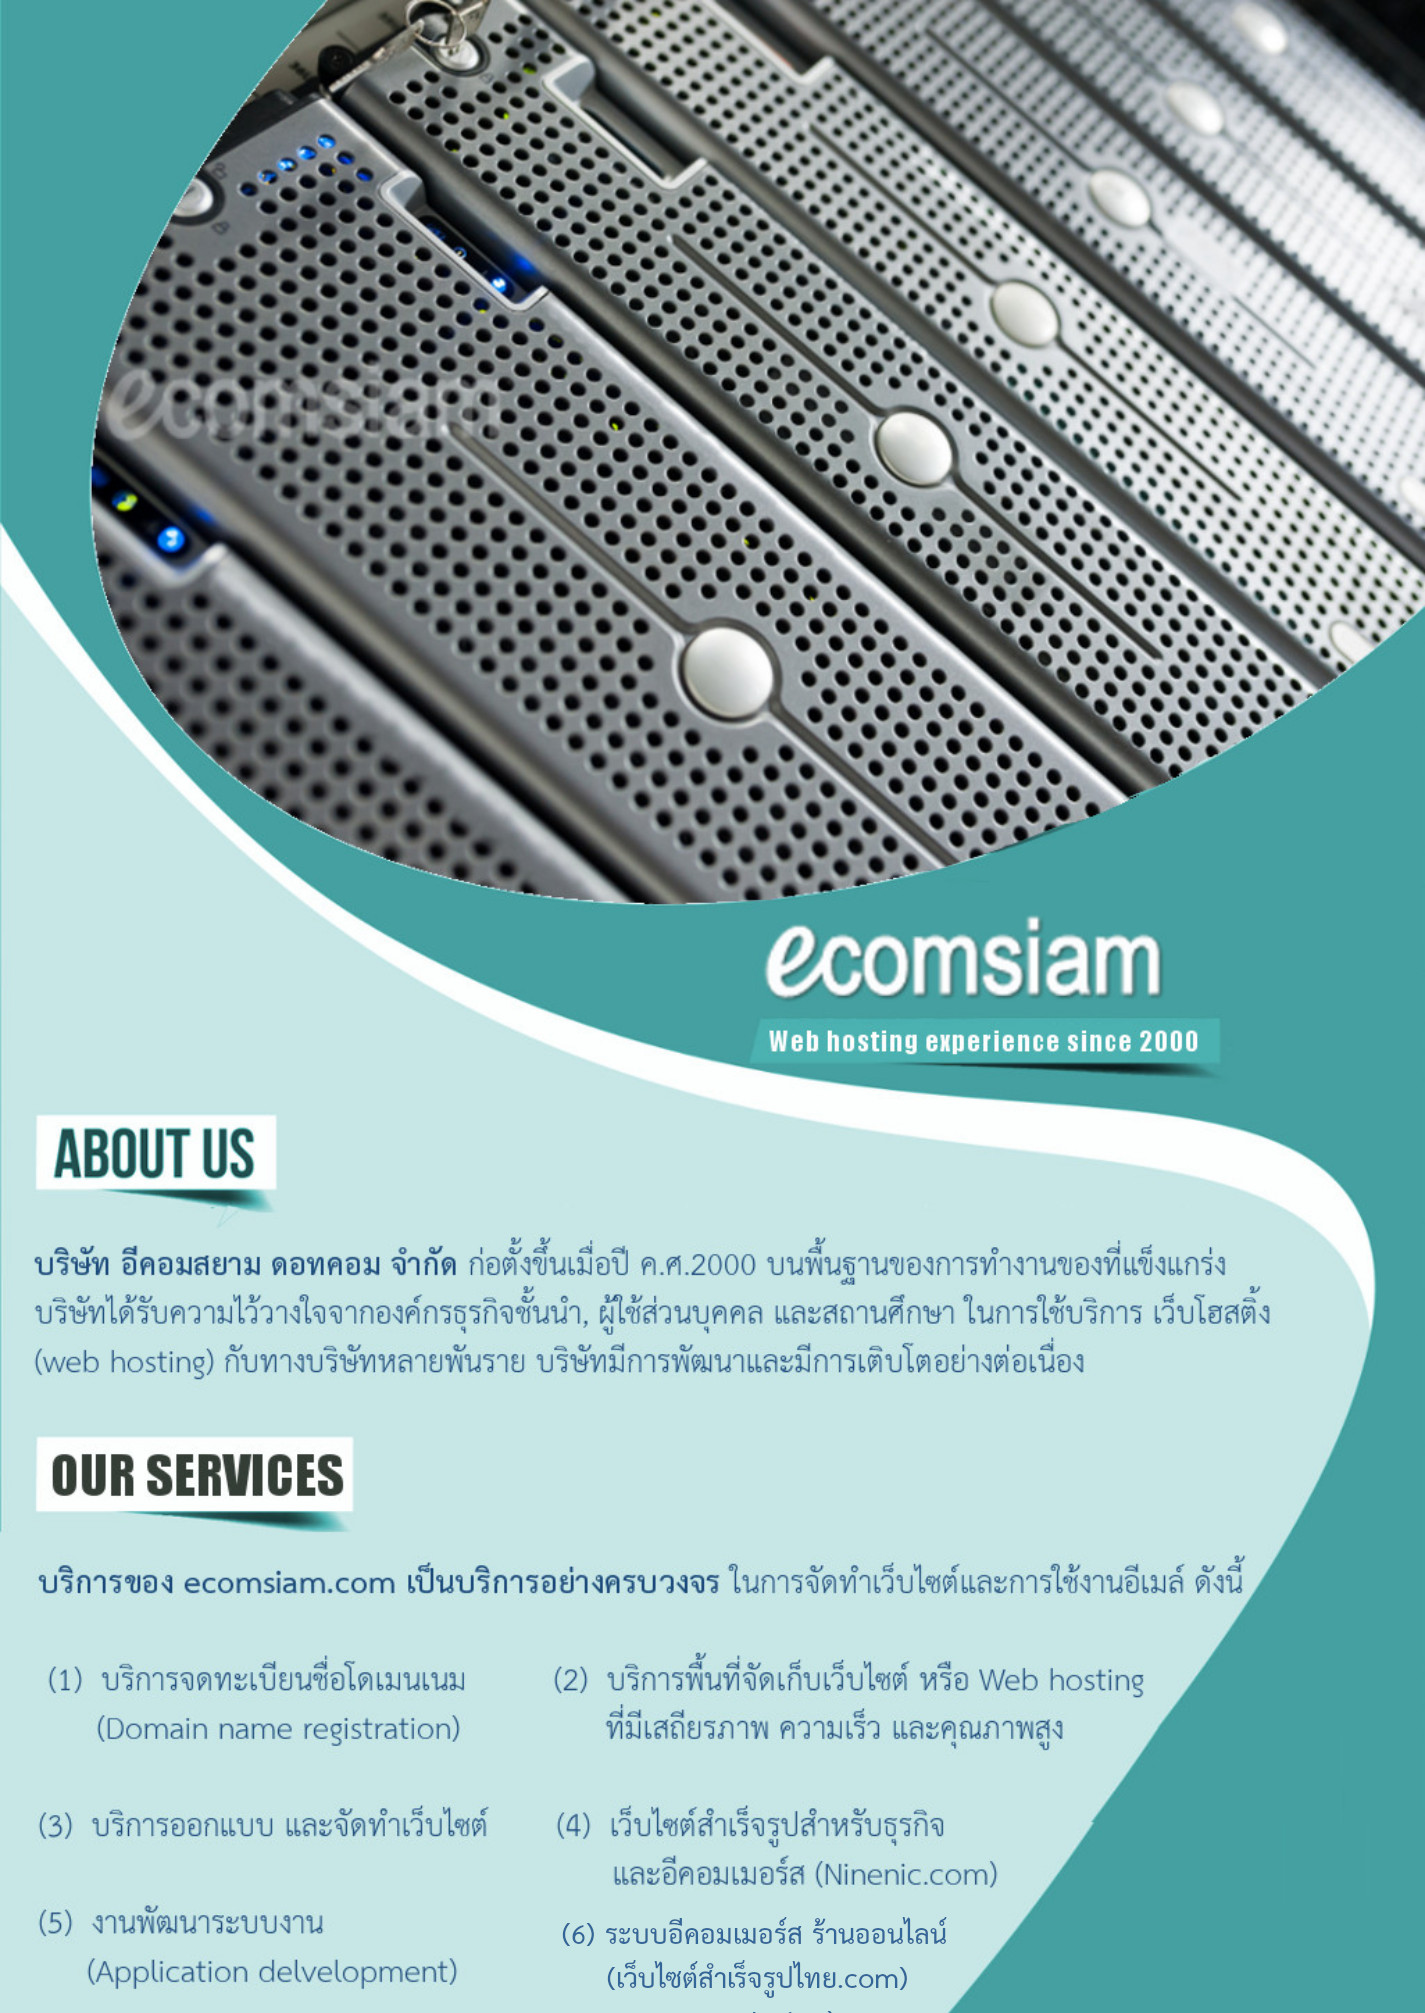 ecomsiam ผู้ให้บริการ web hosting thailand (ประเทศไทย ) บริการเว็บโฮสติ้ง /web hosting ฟรีโดเมน ผู้ให้บริการ web hosting in thailand ใช้ web hosting รายปี ฟรีโดเมน เริ่มต้นเพียง 2,200 บาท/ปี เลือกบริการได้ทั้ง cms web hosting,Blog web hosting,Shopping cart web hosting,Joomla web hosting,Drupal web hosting,OpenCart web hosting,OSCommerce web hosting,Zen Cart Web hosting,Magento Web hosting,PostNuke web hosting,WordPress web hosting,Simple machines web hosting,PHPBB web hosting,MyBB web hosting,Cpanel web hosting นอกจากนี้เว็บโฮสติ้ง(web hosting) ของเรายังมีความพร้อมของระบบ ป้องกัน virus จากอีเมล์ และกรองเมล์ขยะ (spam mail filter) รับจดโดเมน .co.th .ac.th 800 บ./ปี จดโดเมน .com 490 บ./ปี และบริการเว็บสำเร็จรูป ฟรีโดเมน ที่ใช้งานง่าย ถูกใจ   